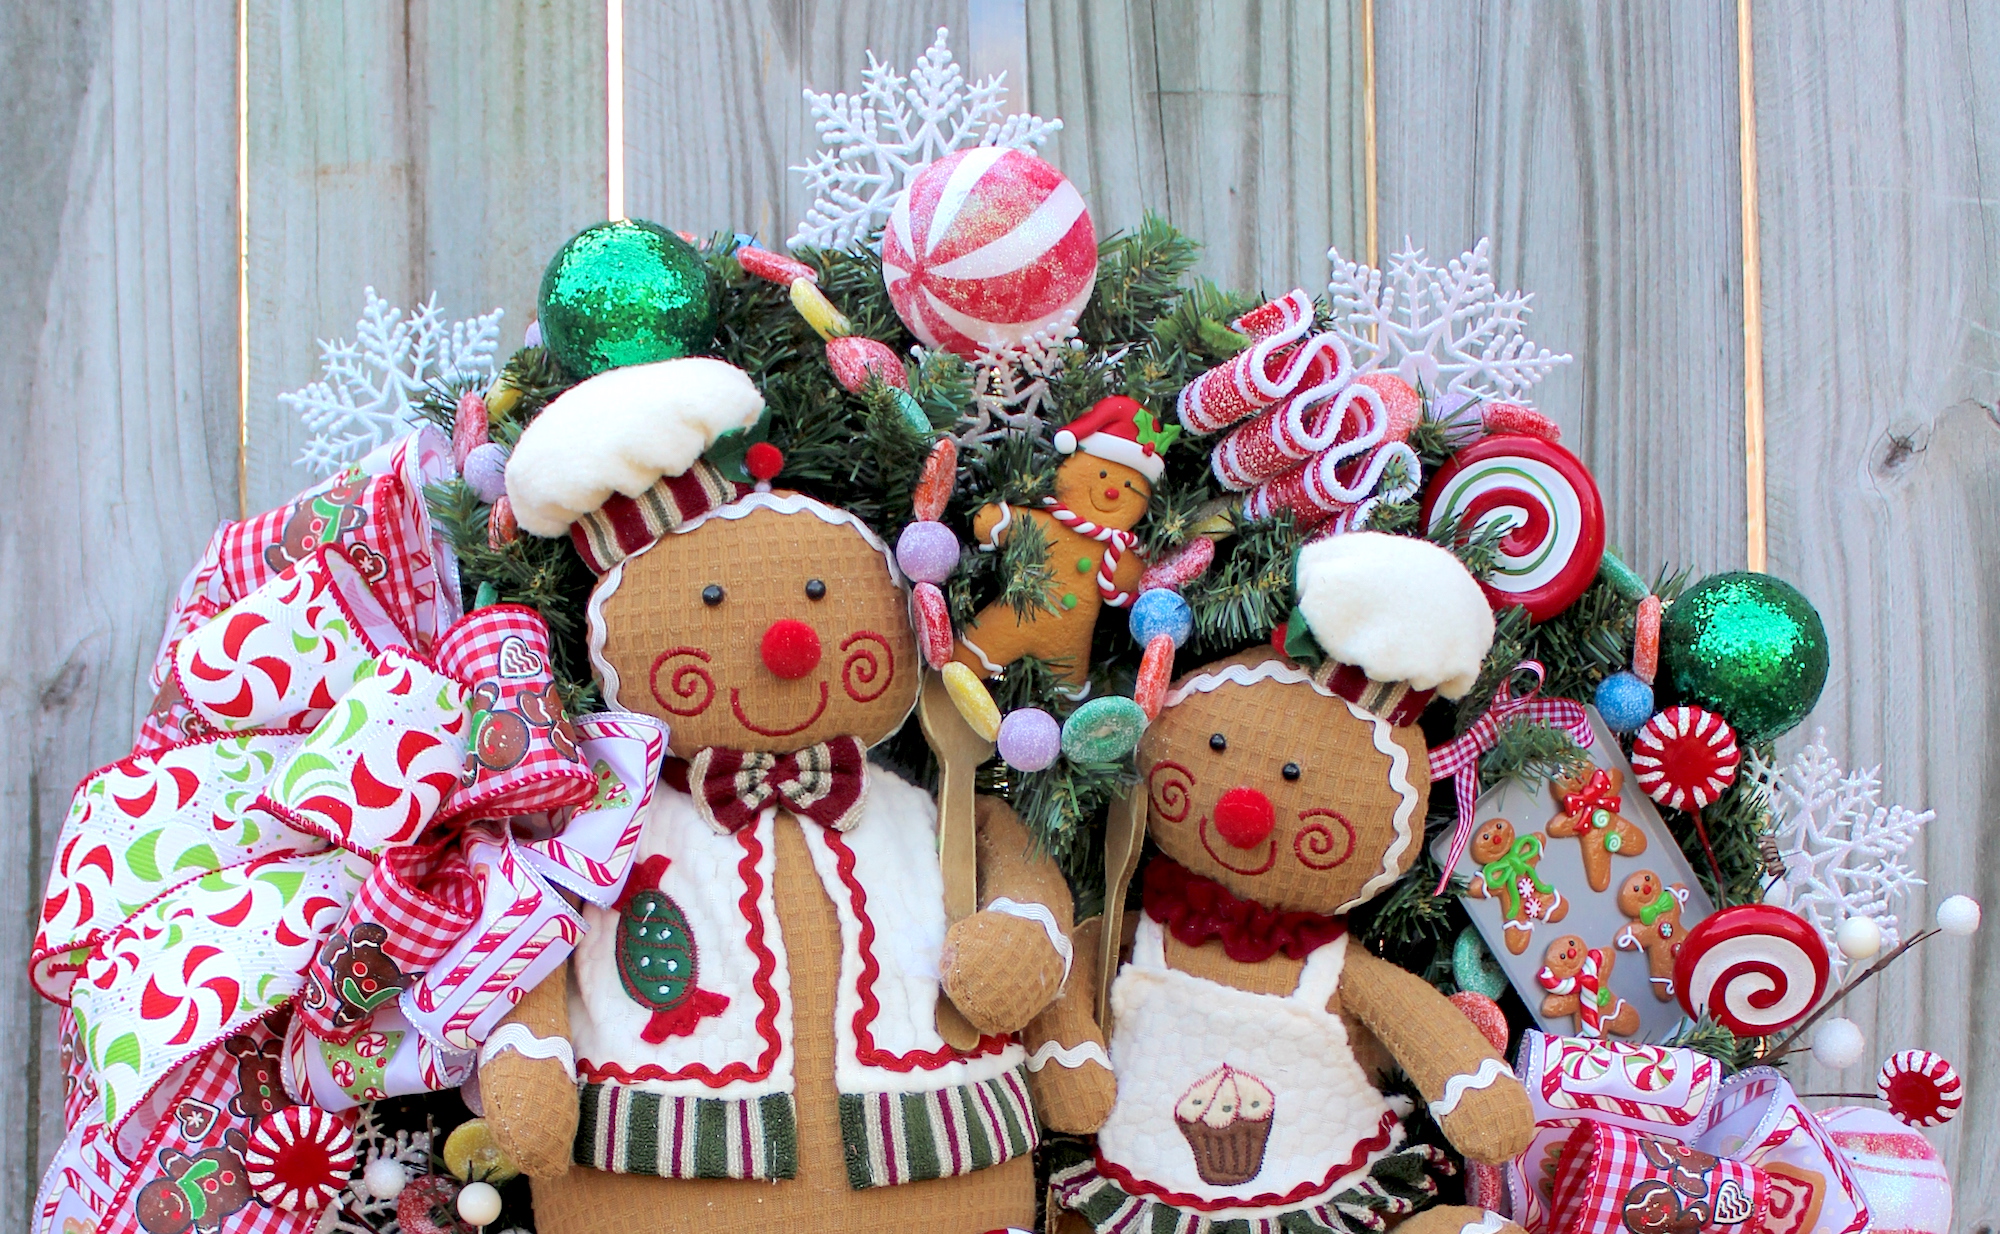 Irish Girl's Wreaths | Top Quality Handmade Artisan Floral Wreaths for ...